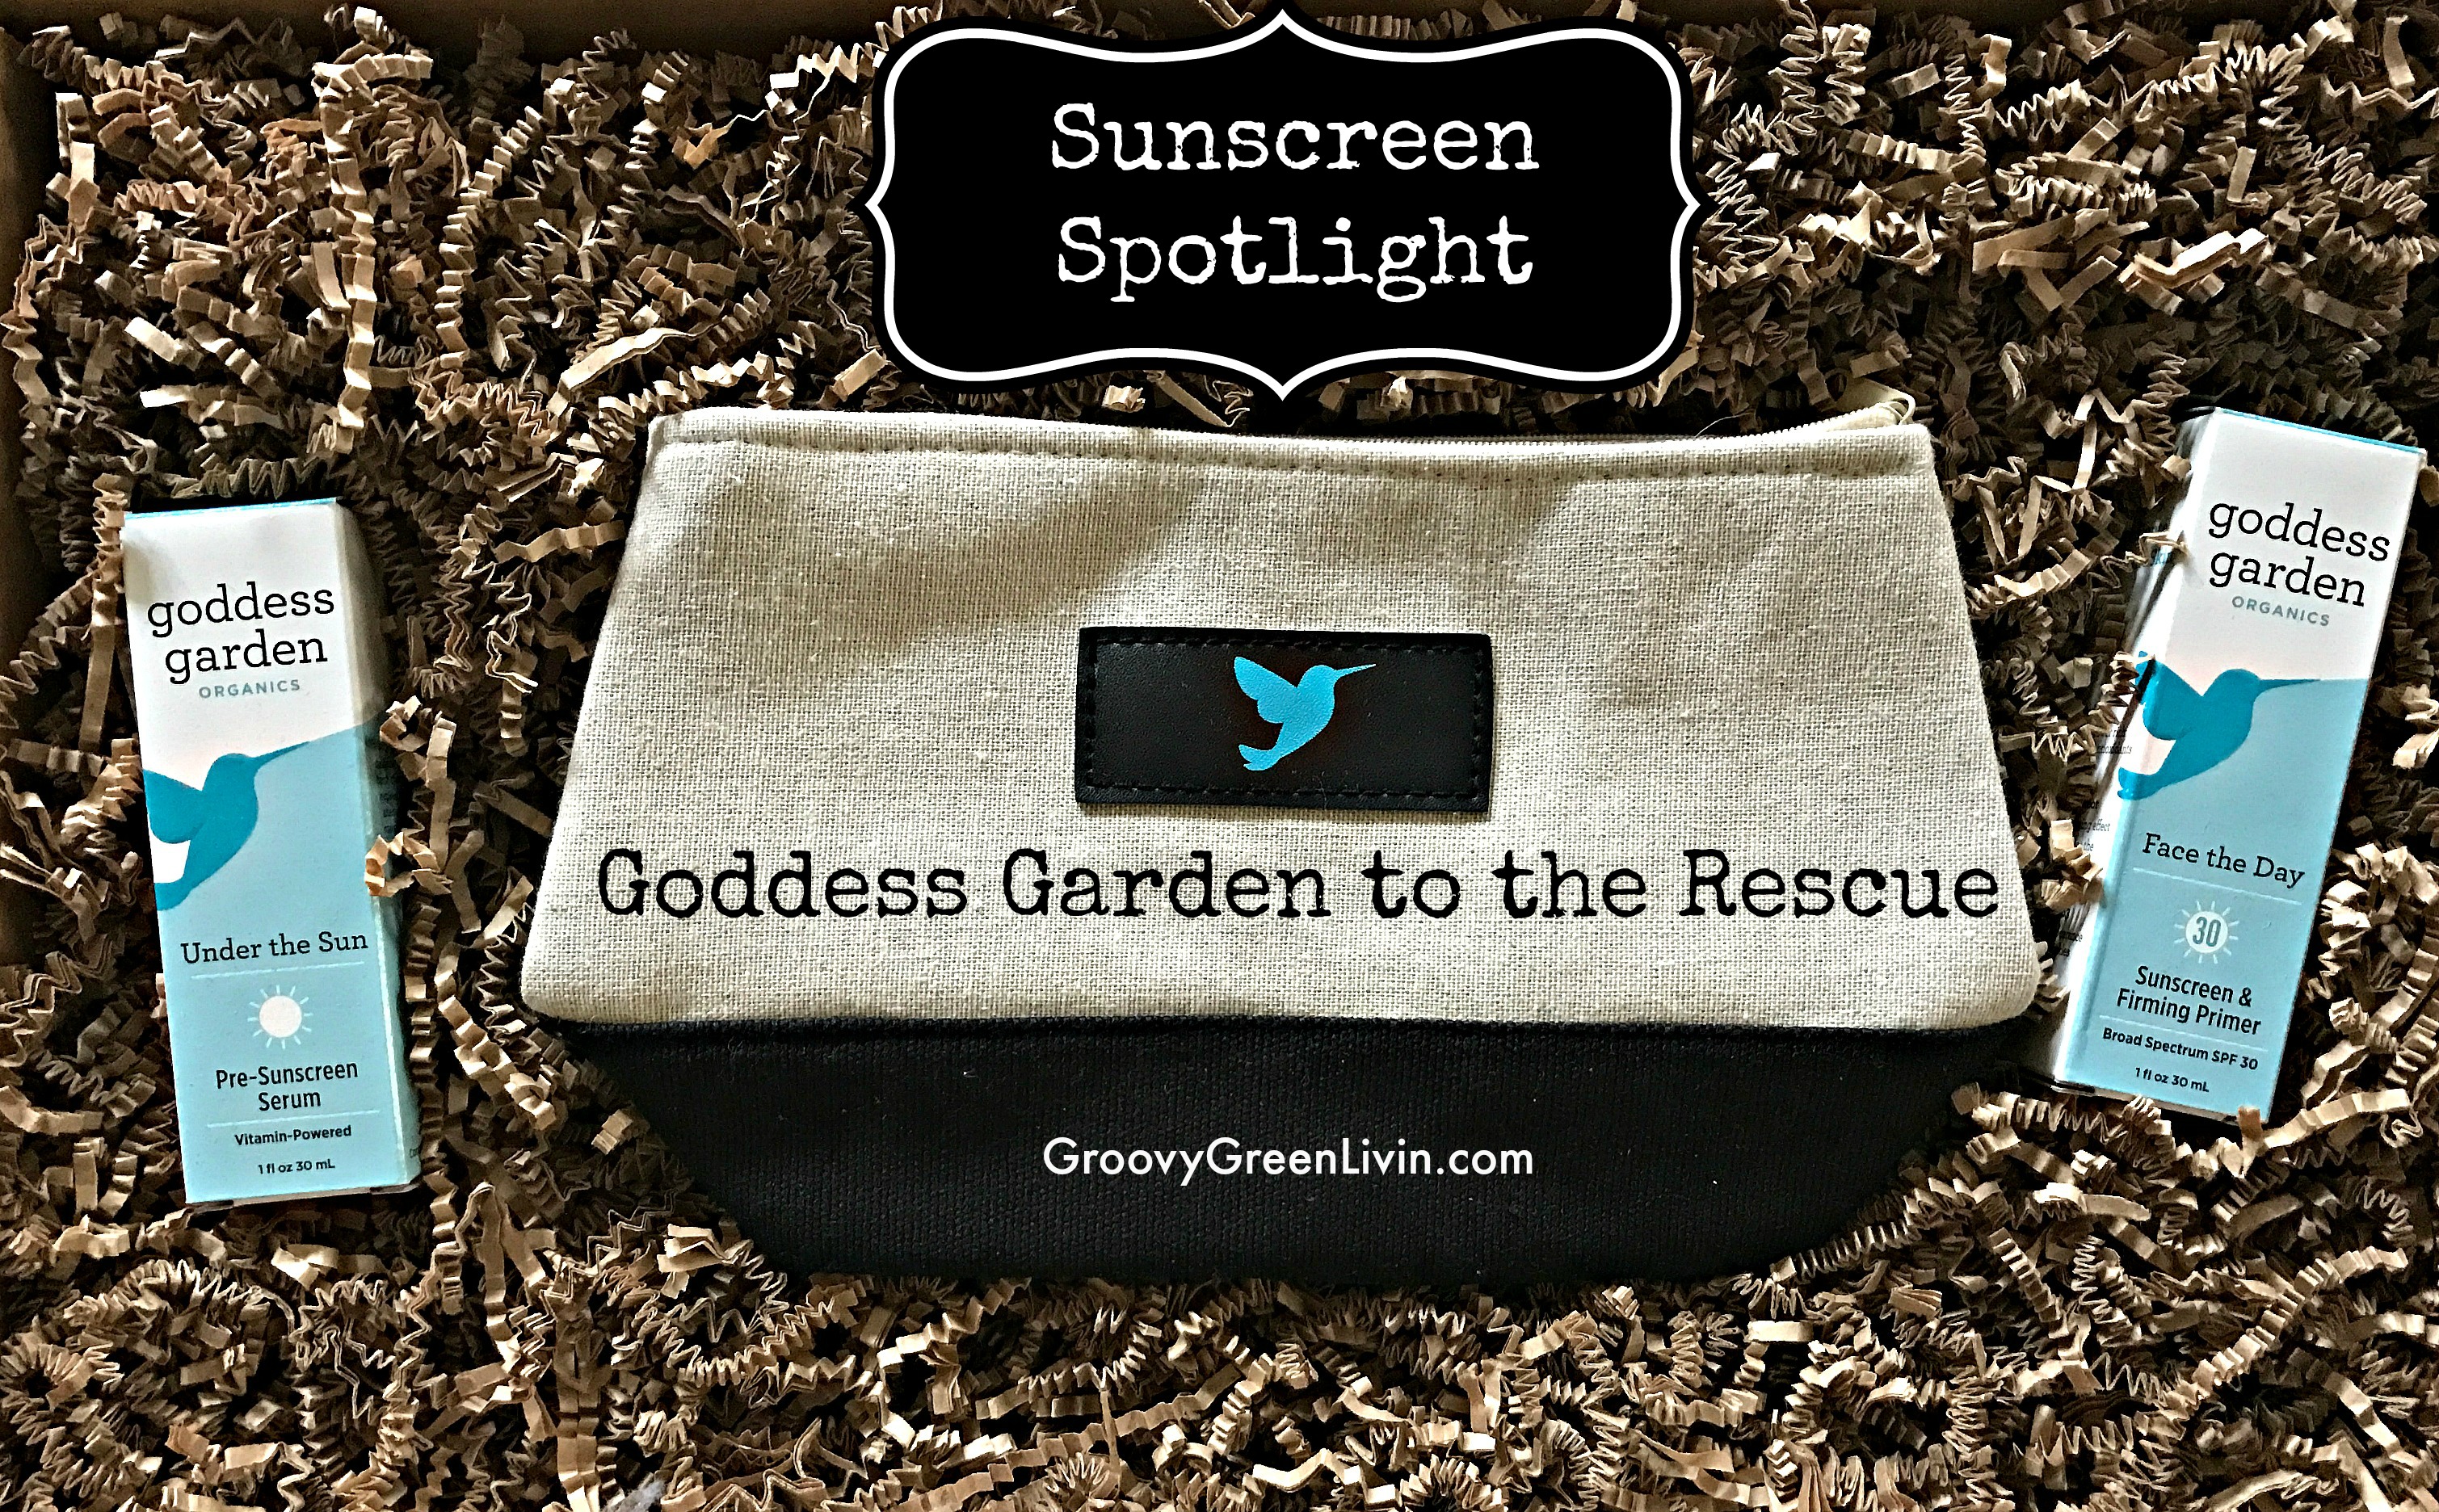 Sunscreen Spotlight: Goddess Garden to the Rescue! Groovy Green Livin